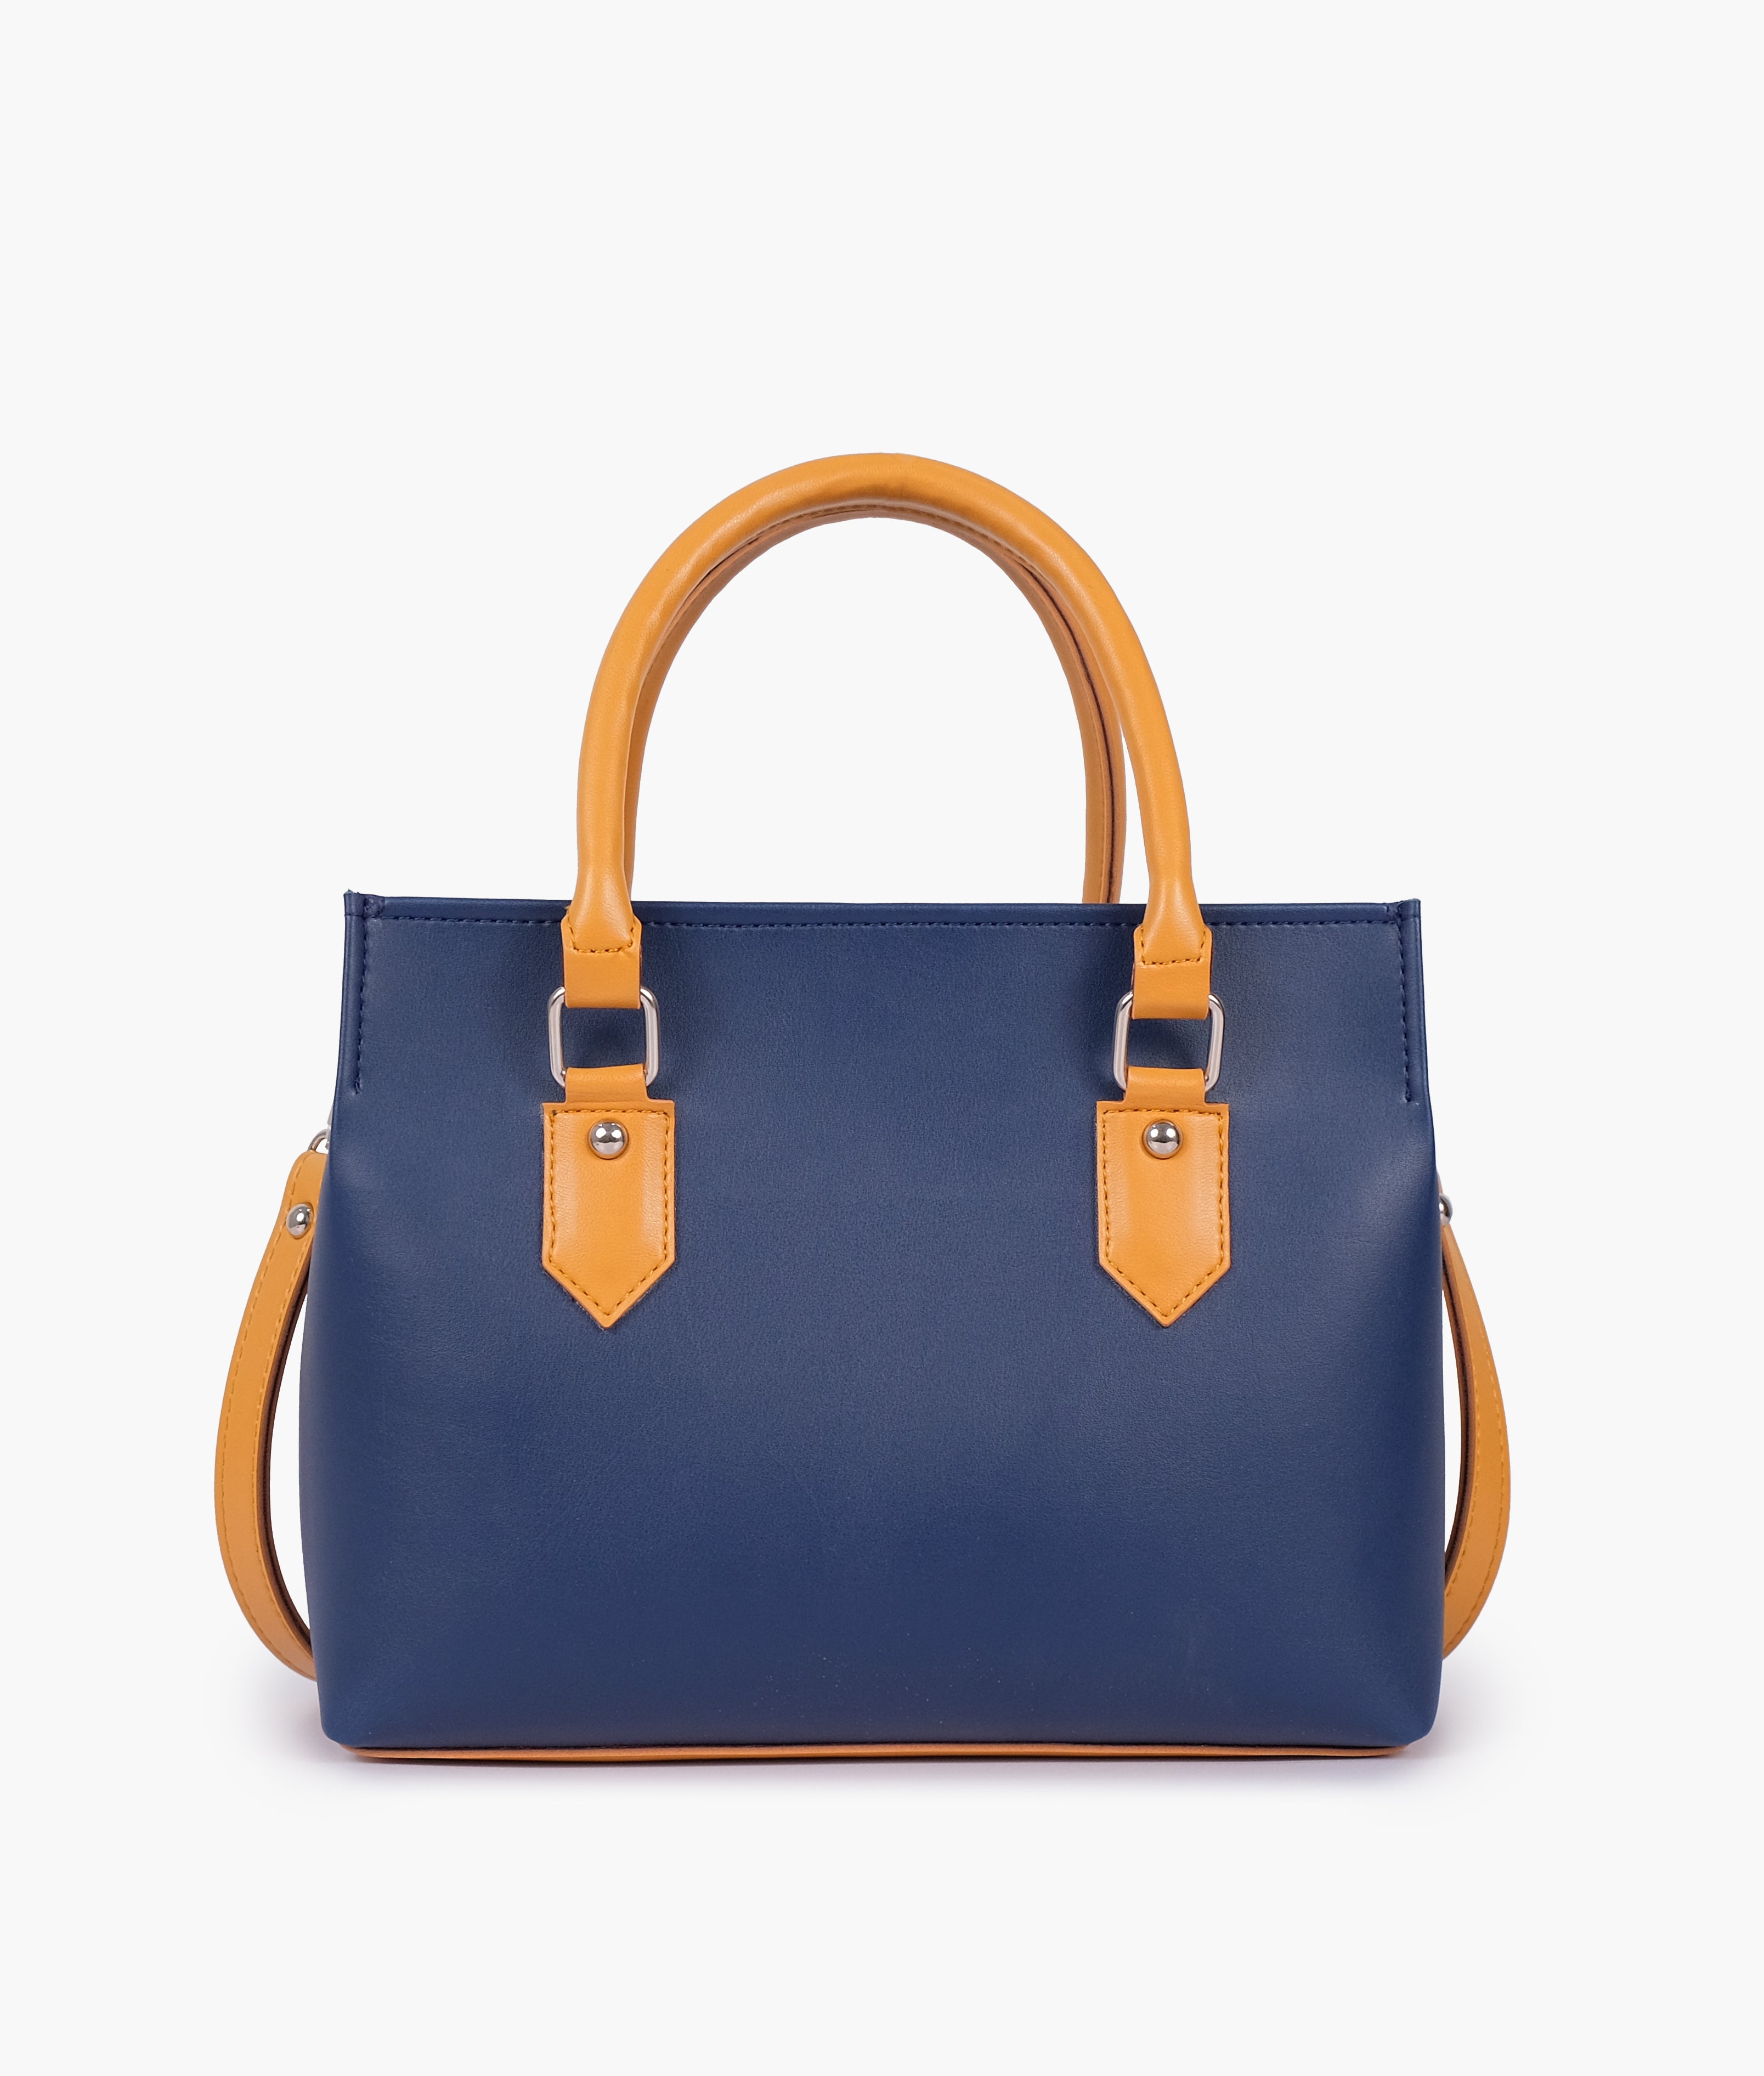 Blue small satchel bag